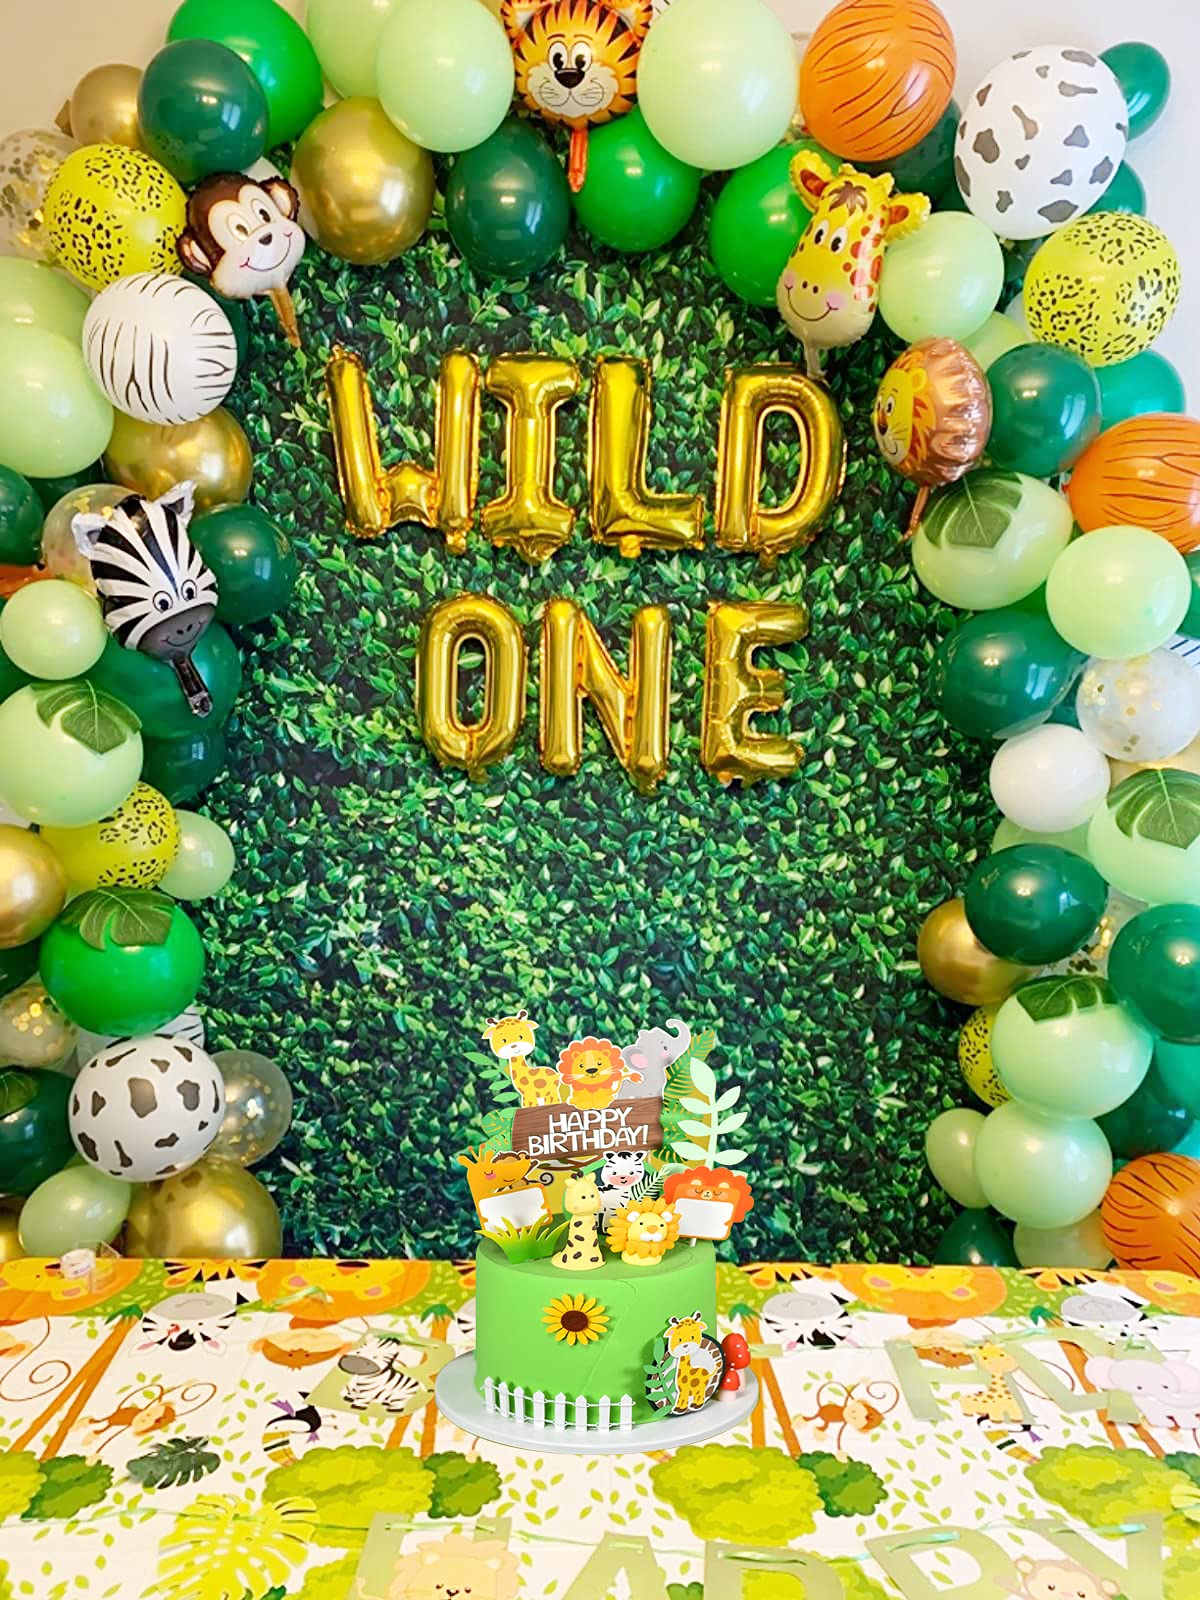 Safari Birthday Decorations, 58PC Wild Jungle Theme Party Supply Animal Balloon Garland Kit Baby Shower Decor for Boy with Monkey Tiger Lion Zebra Reusable Balloon Happy Birthday Banner Tablecloth